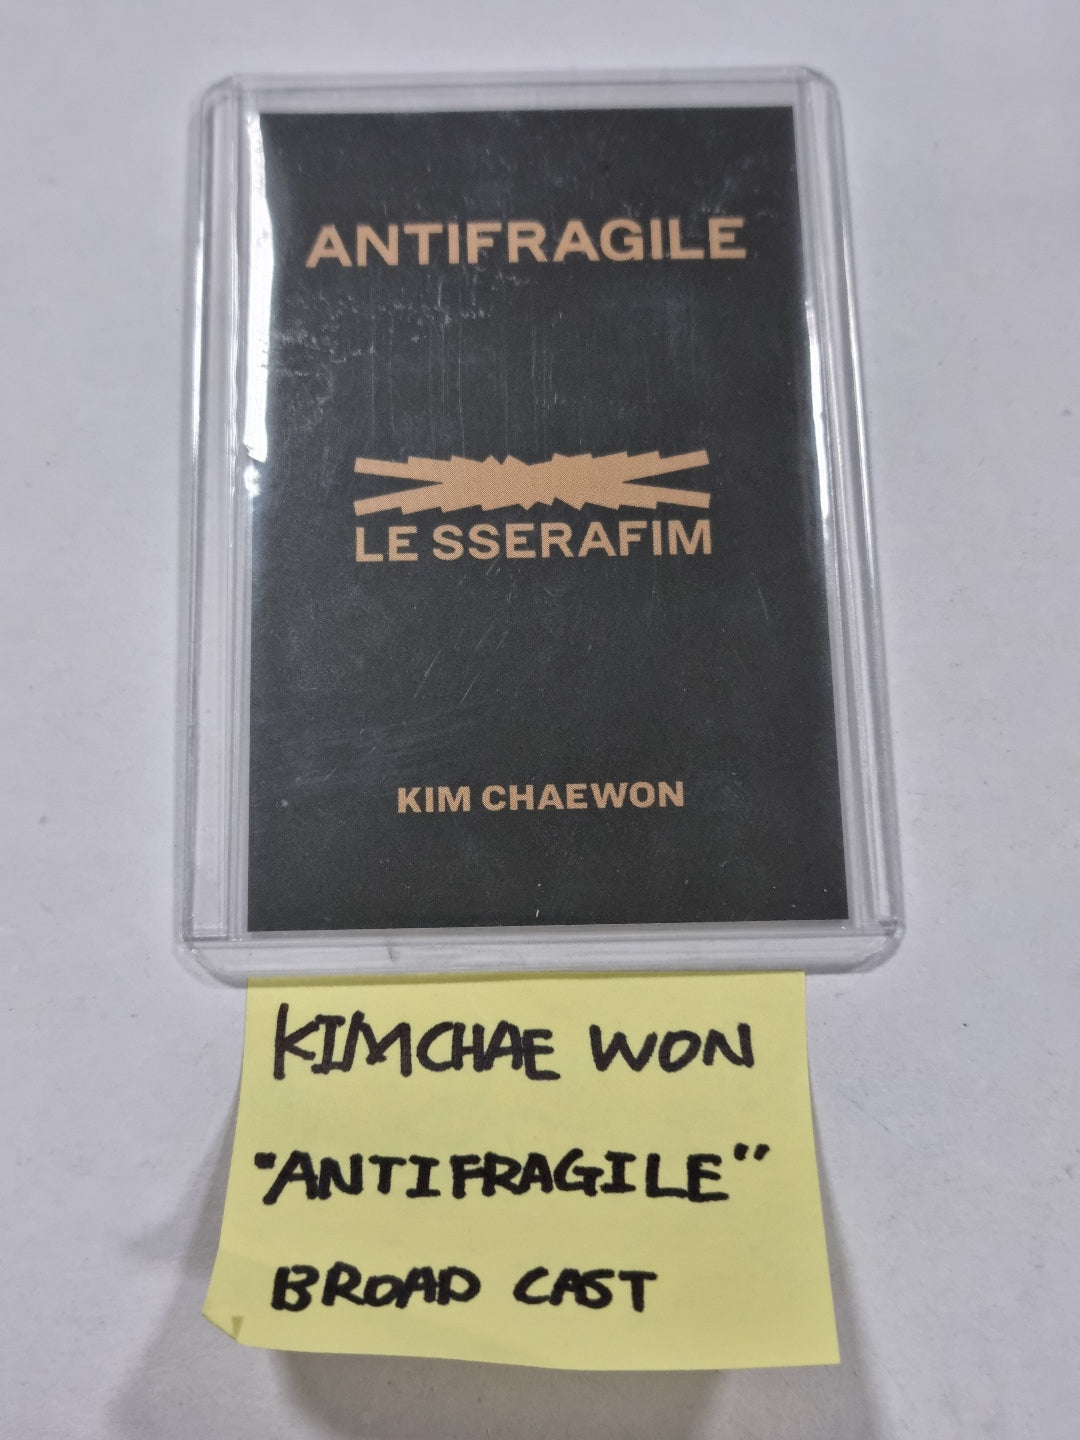 LE SSERAFIM "ANTIFRAGILE" 2nd ミニ アルバム - ブロードキャスト フォトカード、ポストカード セット (5枚)